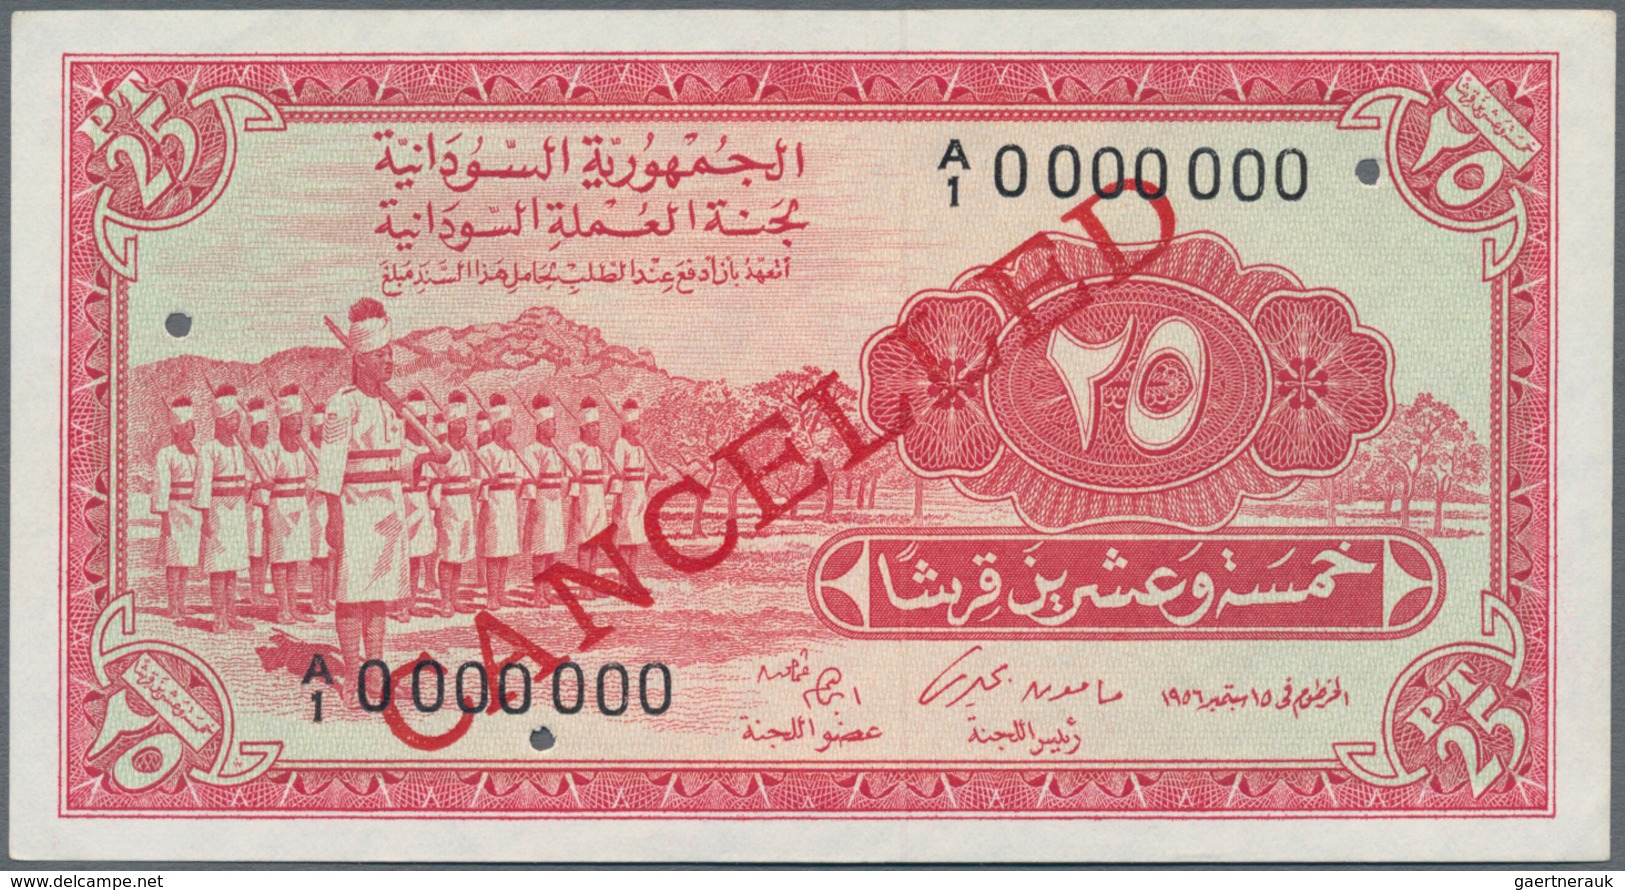 Sudan: Sudan Currency Board Pair With 25 Piastres 1956 SPECIMEN, P.1As In UNC Condition And 25 Piast - Sudan